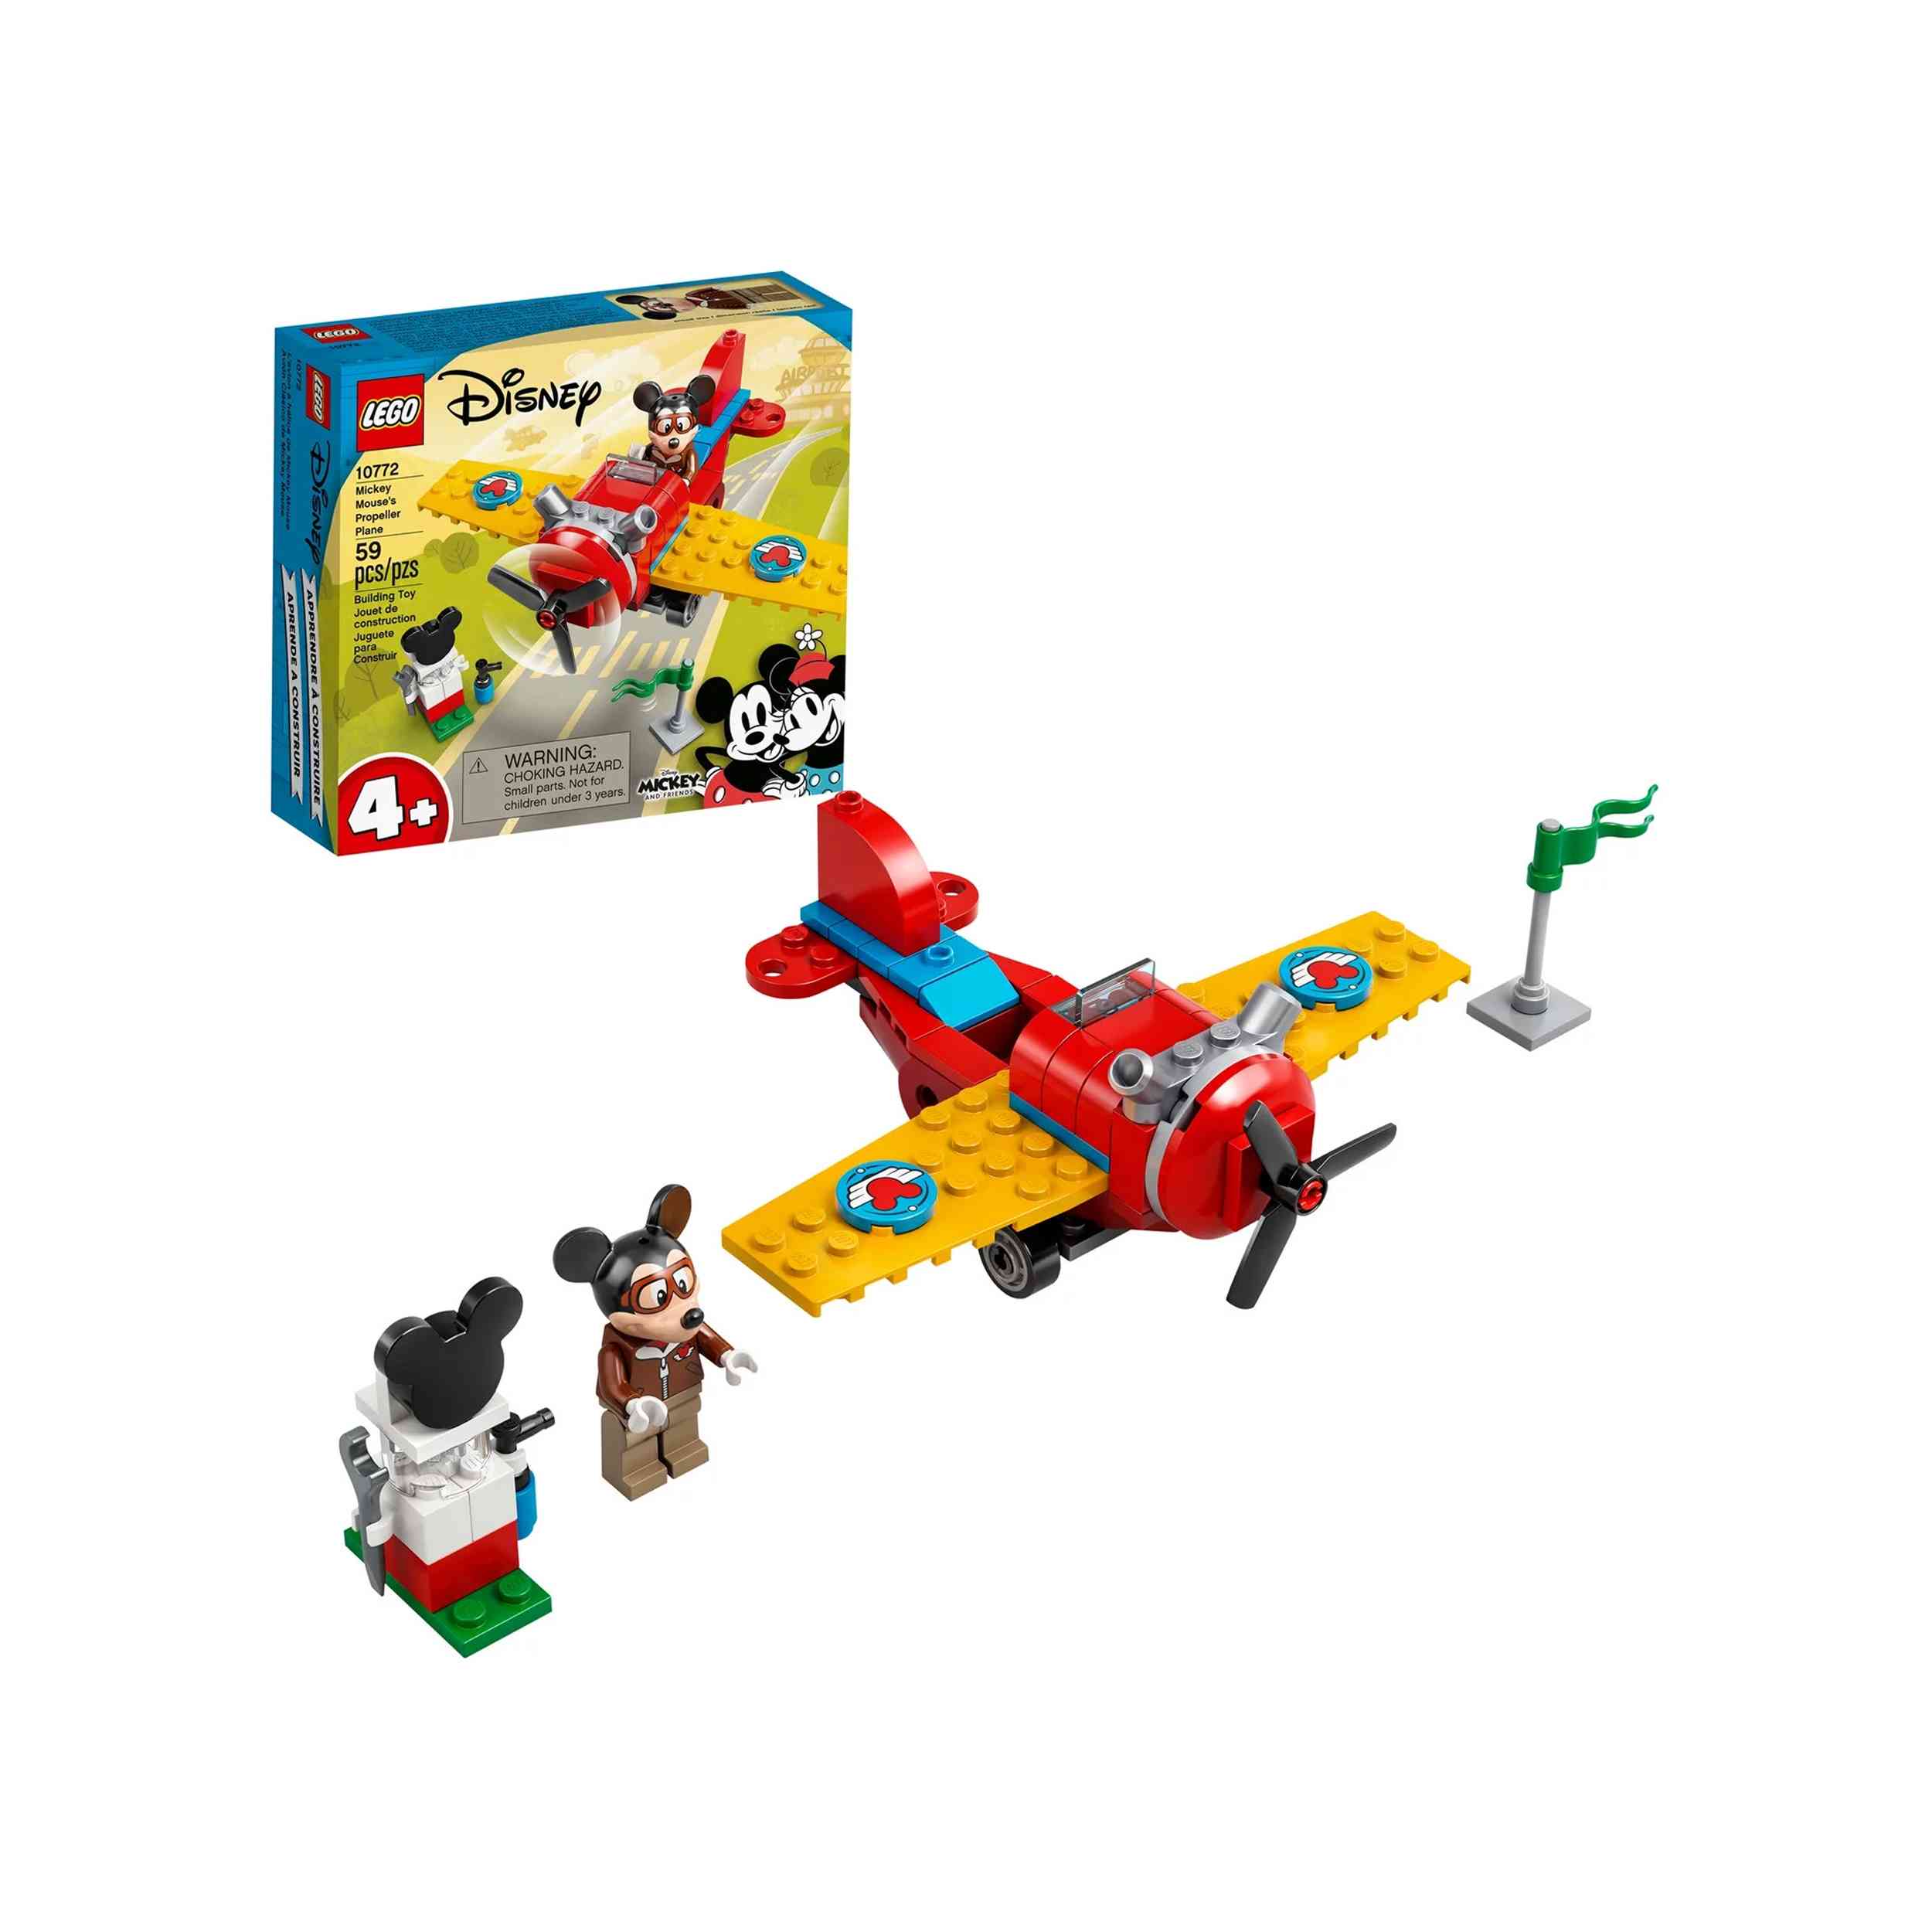 Lego - Mickey Mouse Plane